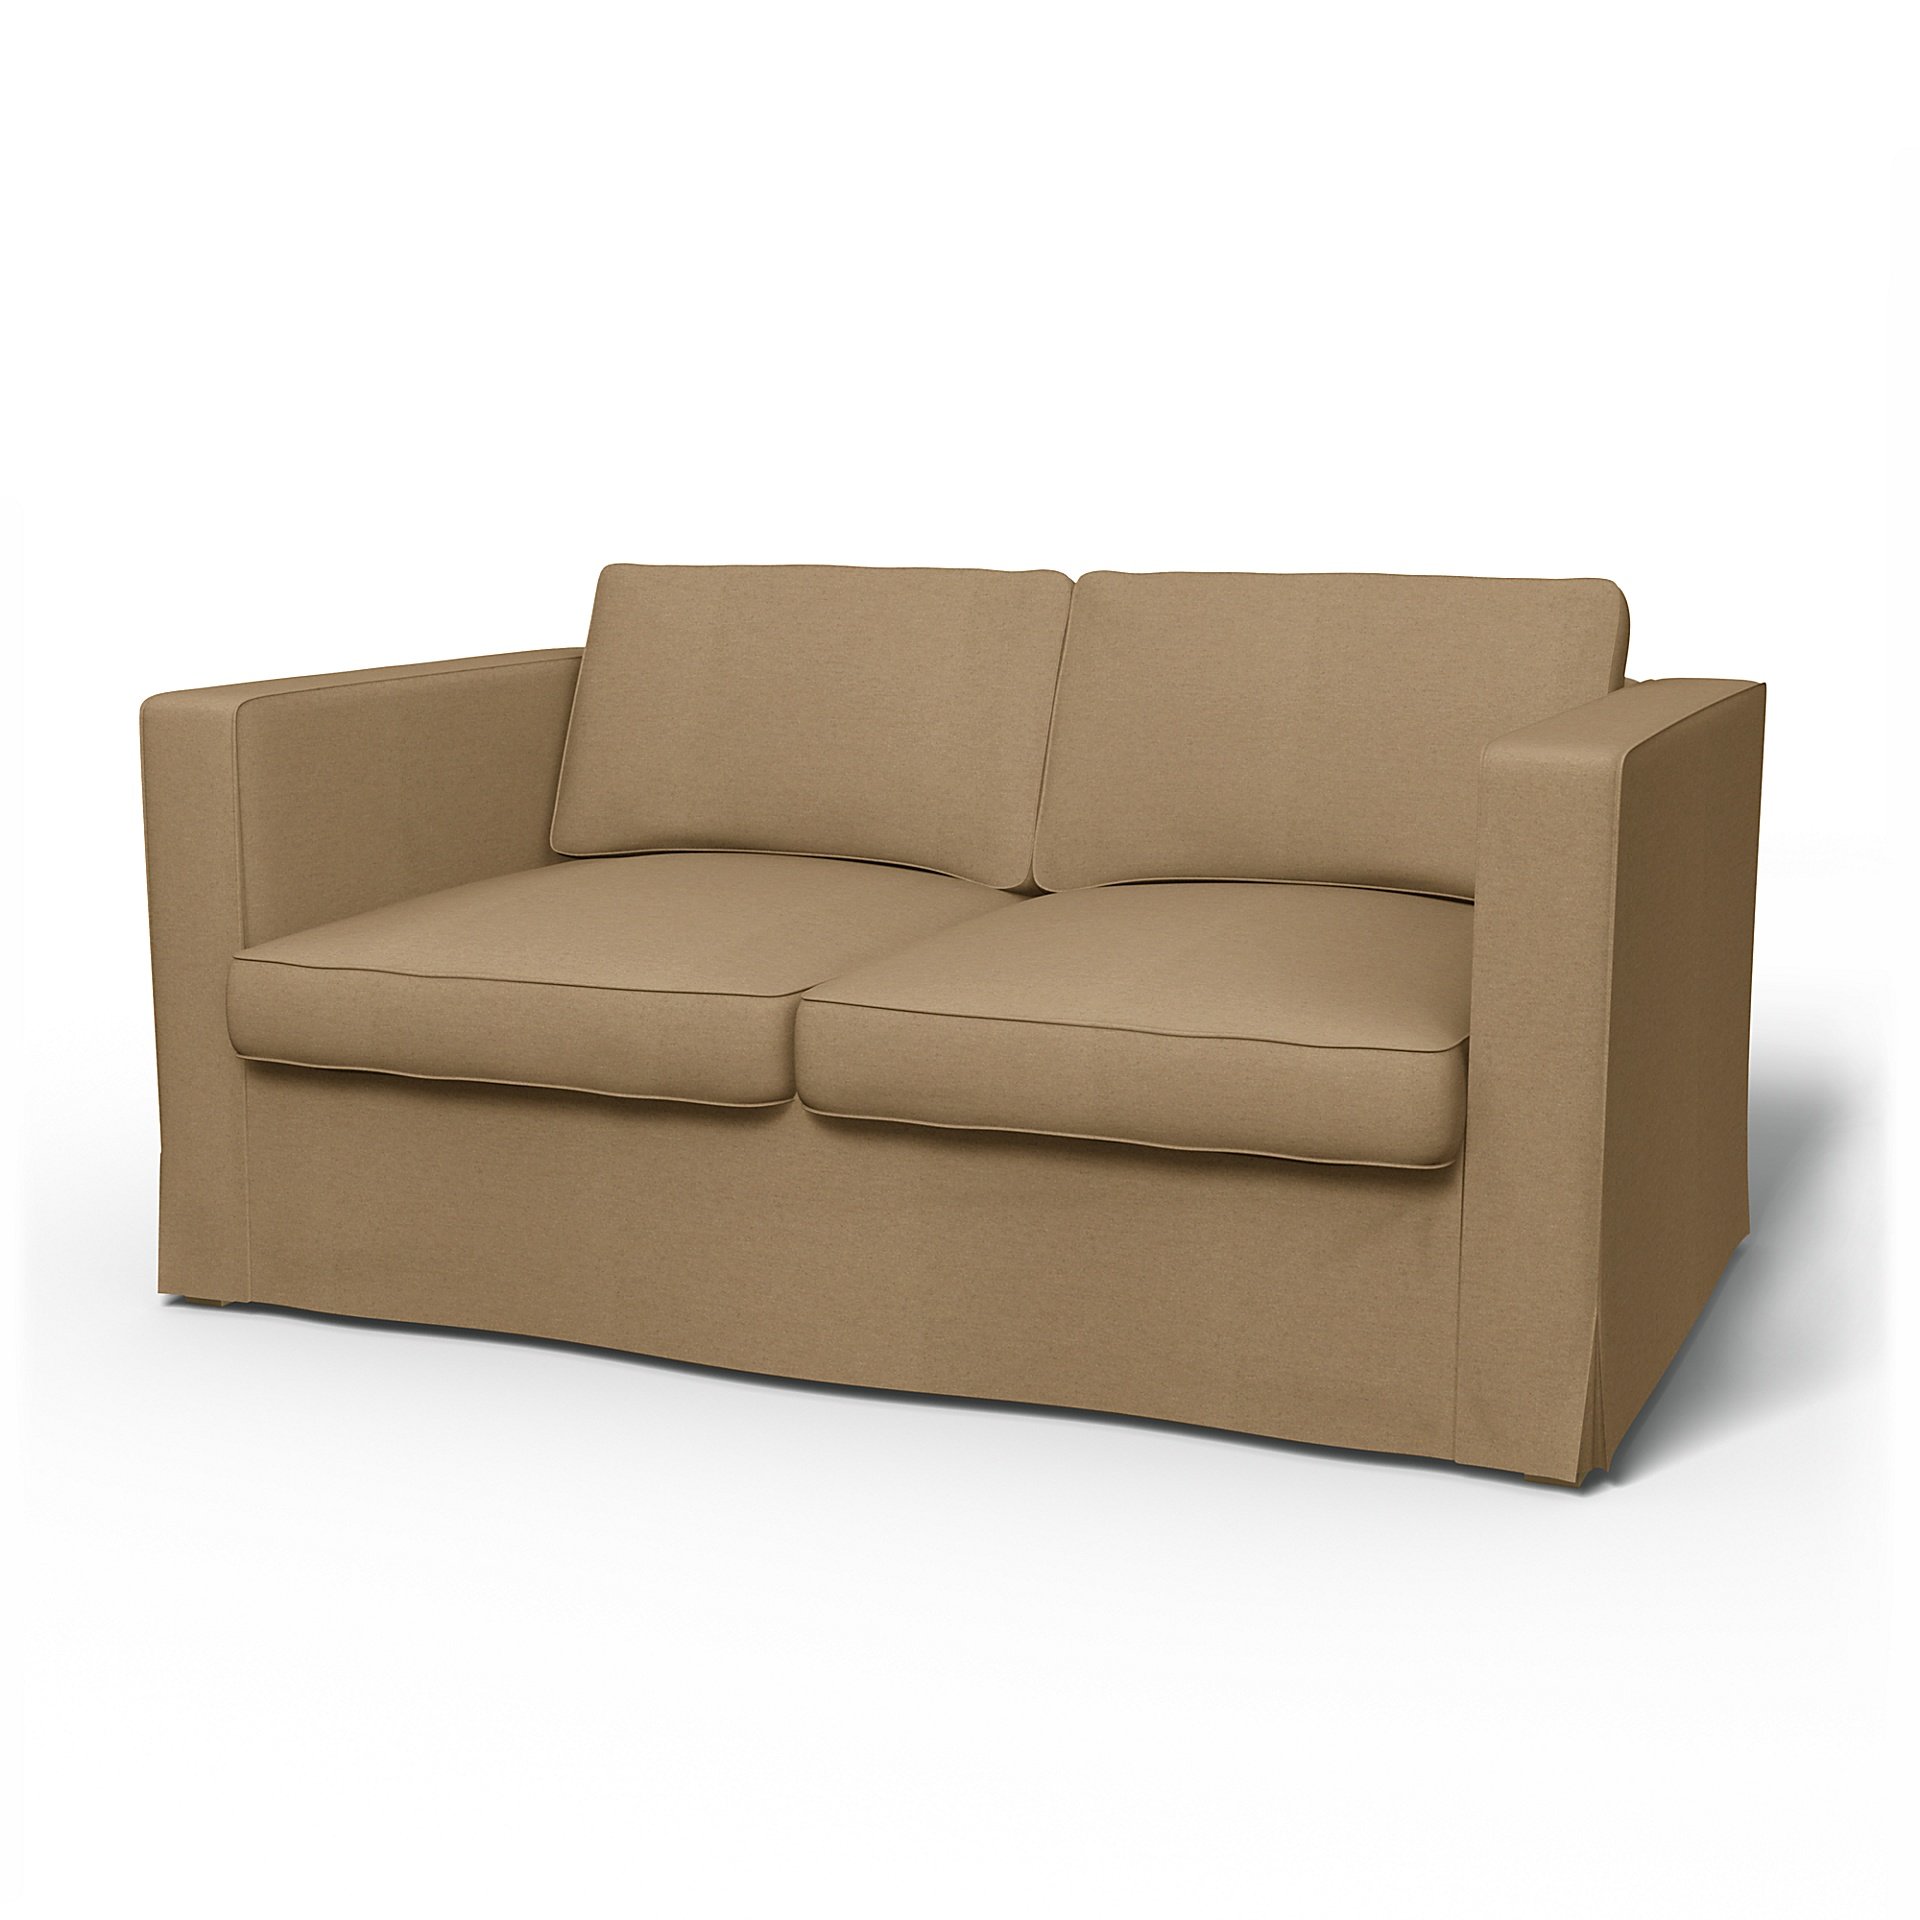 IKEA - Karlanda 2 Seater Sofa Cover, Sand, Wool - Bemz